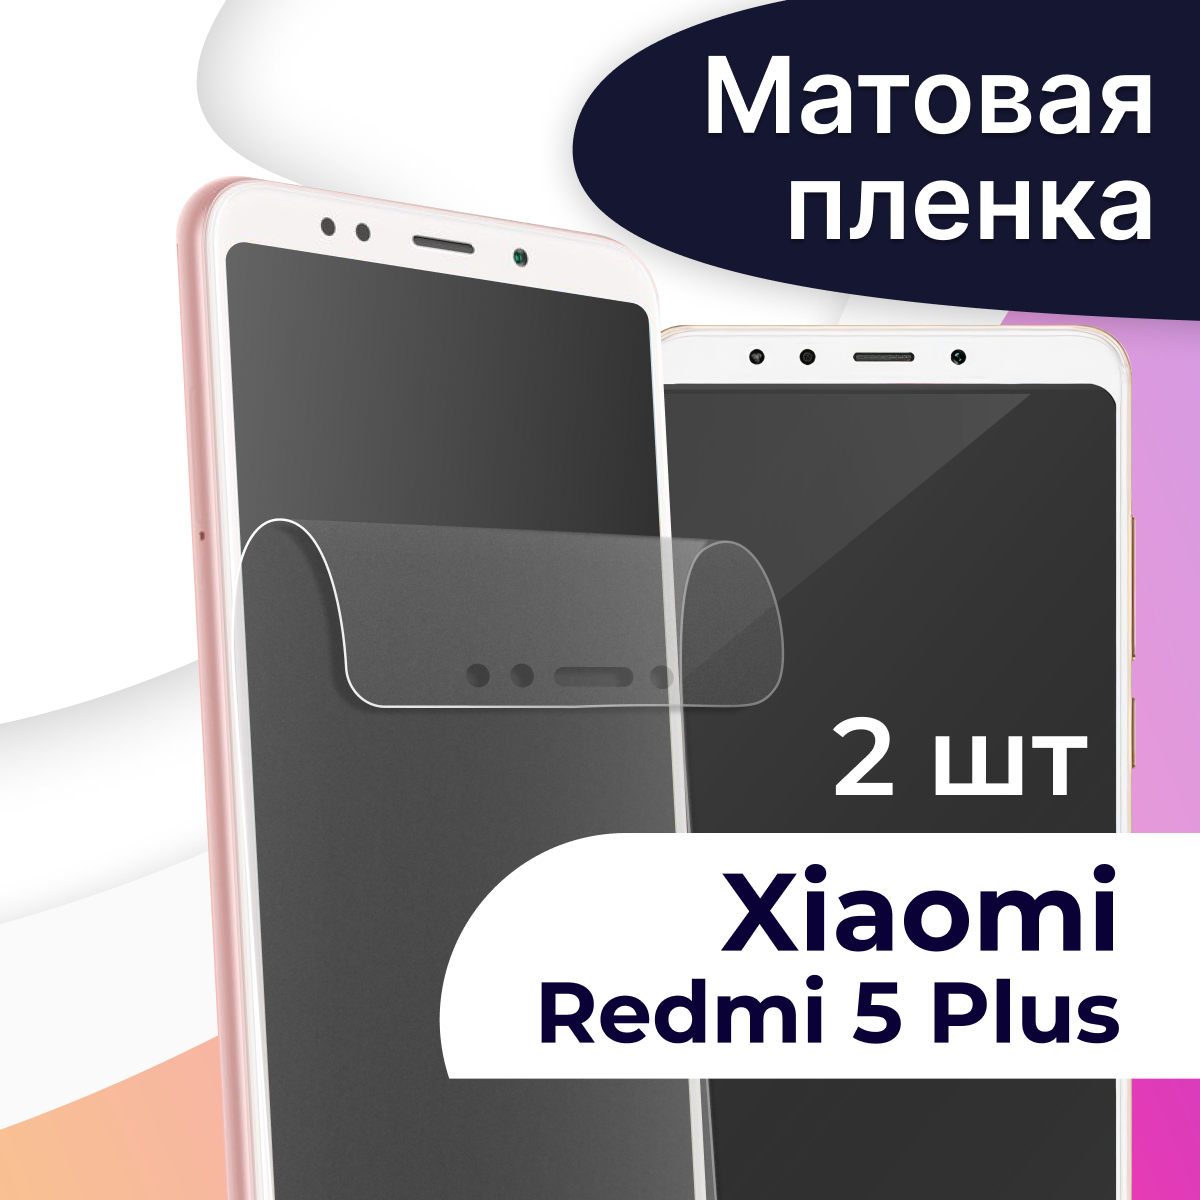 Матовая пленка на телефон Xiaomi Redmi 5 Plus / Гидрогелевая противоударная пленка для смартфона Сяоми Редми 5 Плюс / Защитная пленка